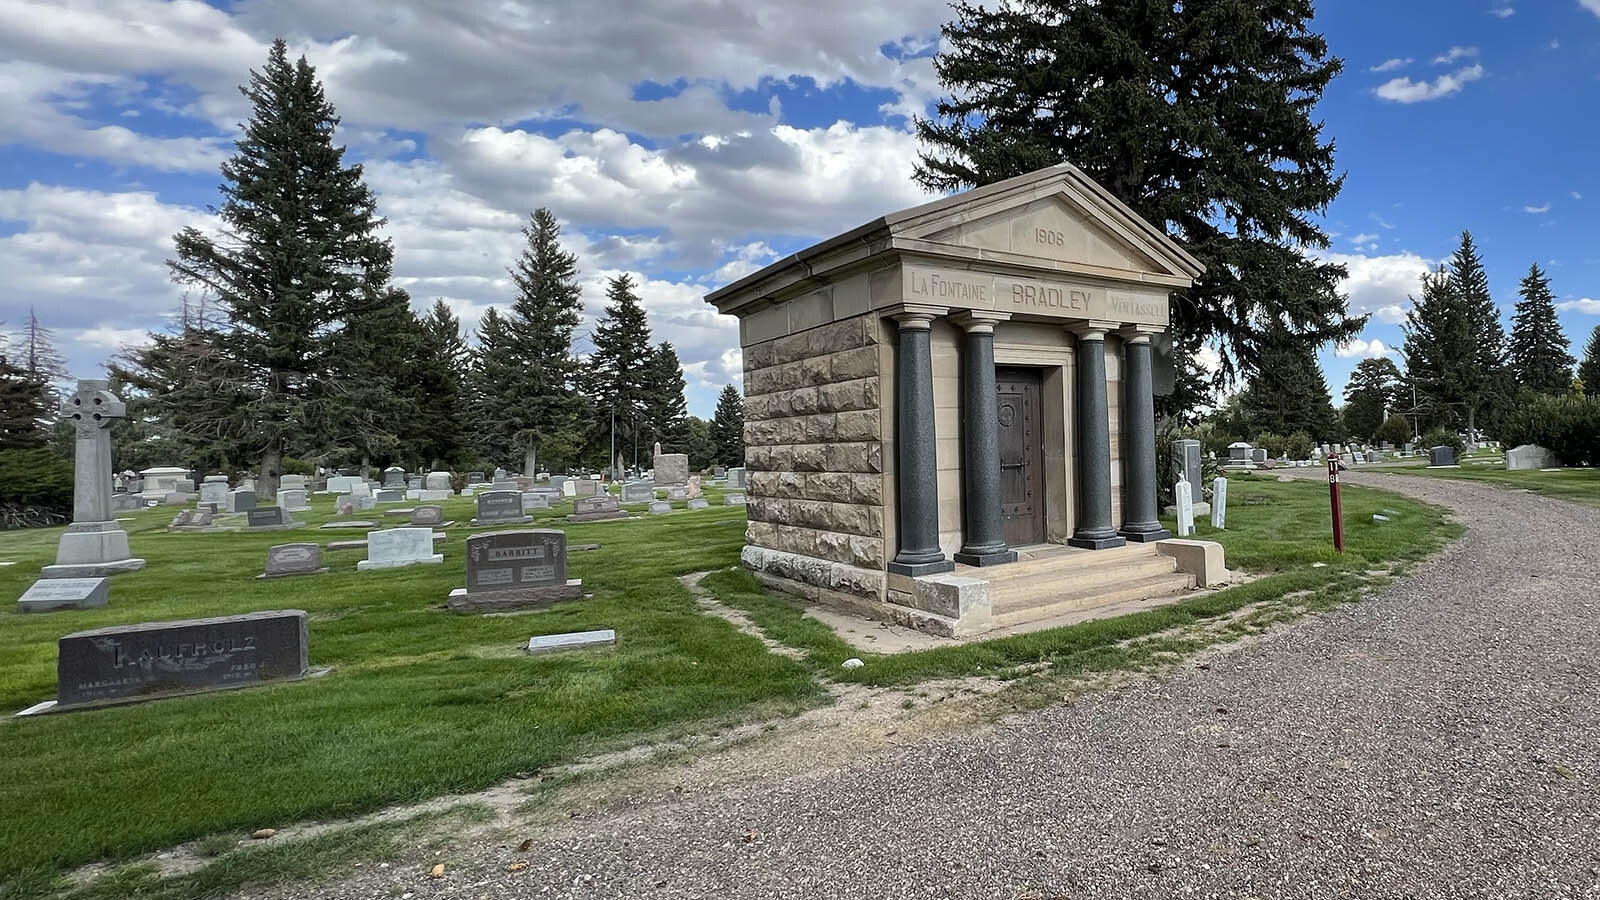 Cheyenne graveyard 9 22 23